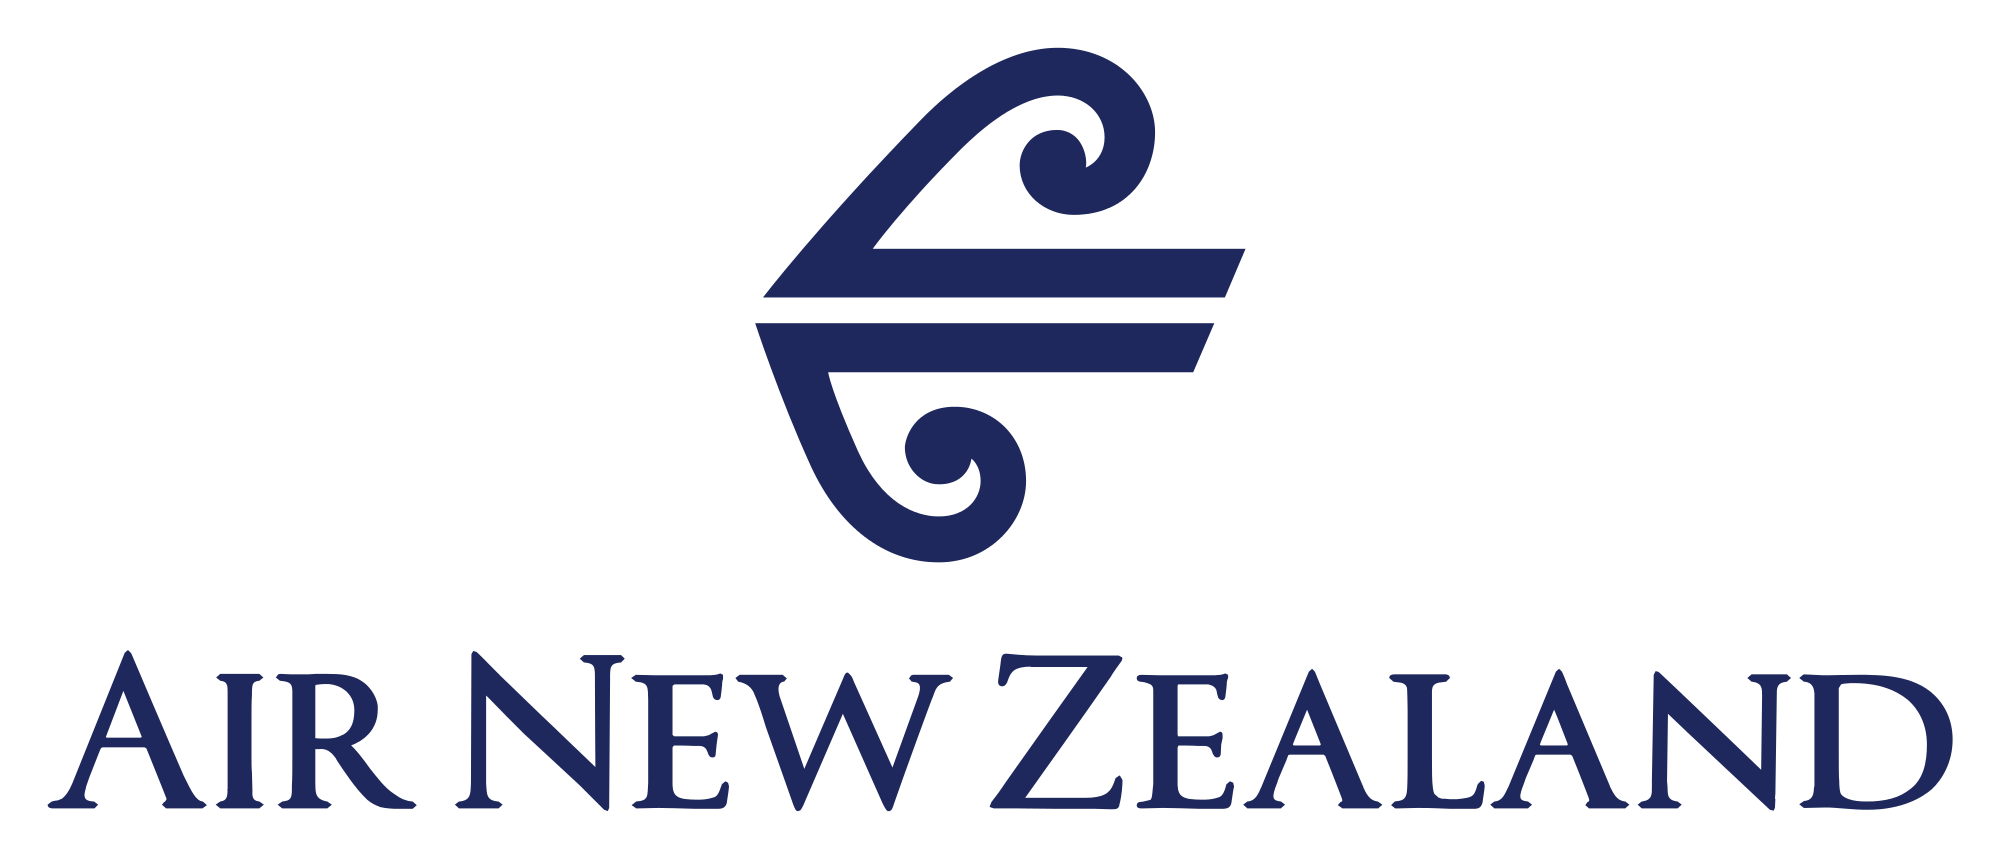 Air_Newzealand Logo Svg. Air New Zealand Pitches Media - Air New Zealand, Transparent background PNG HD thumbnail